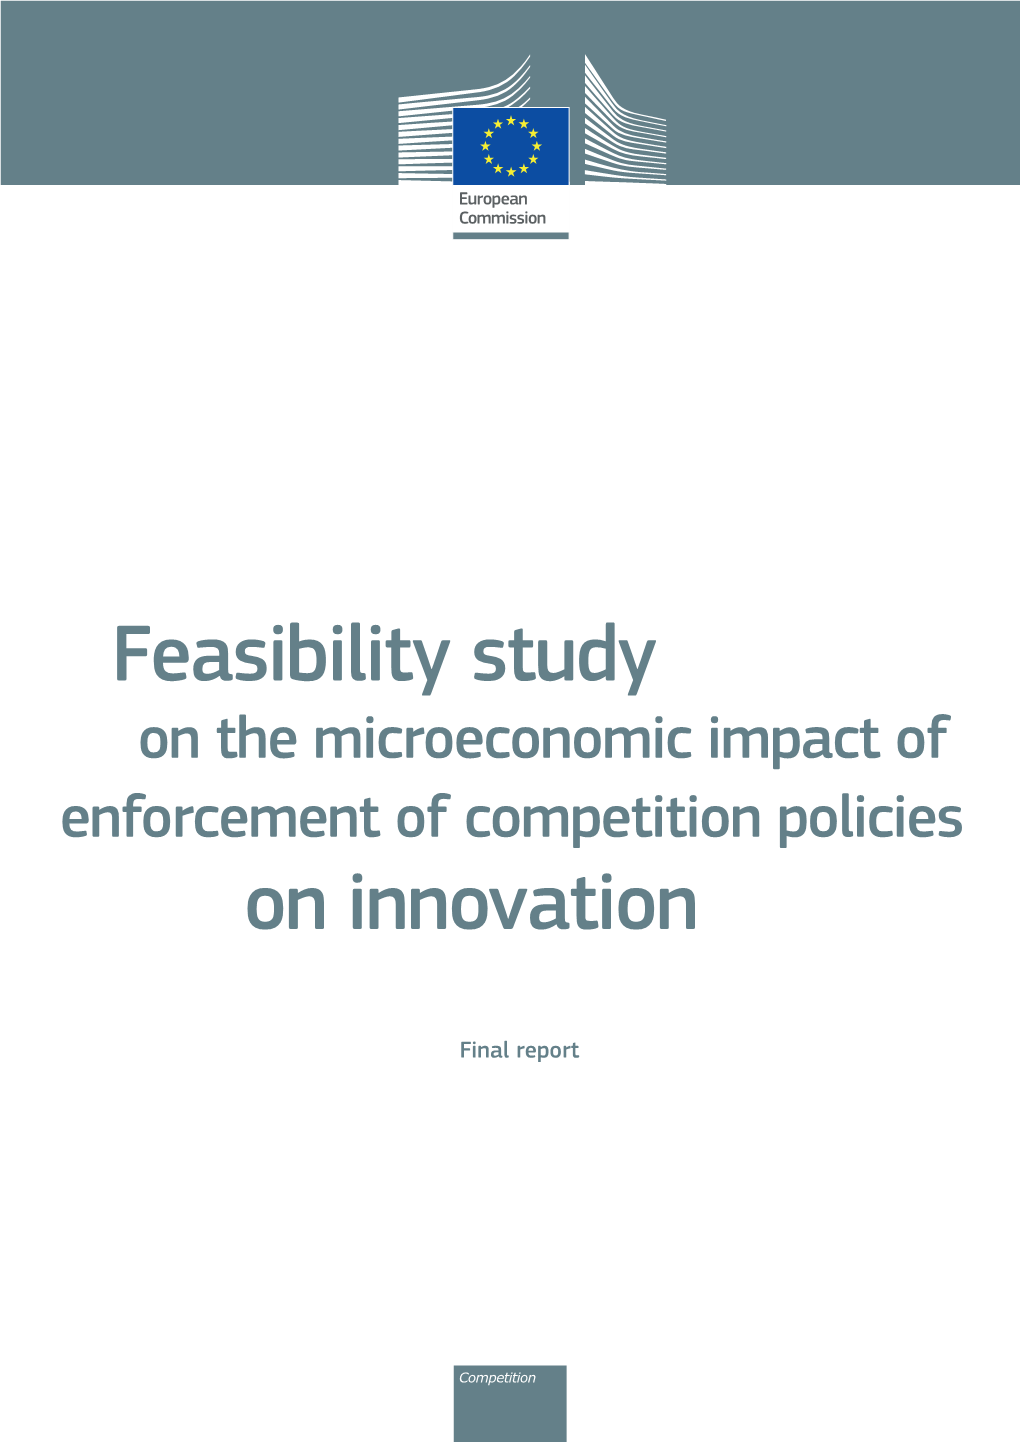 Feasibility Study on Innovation